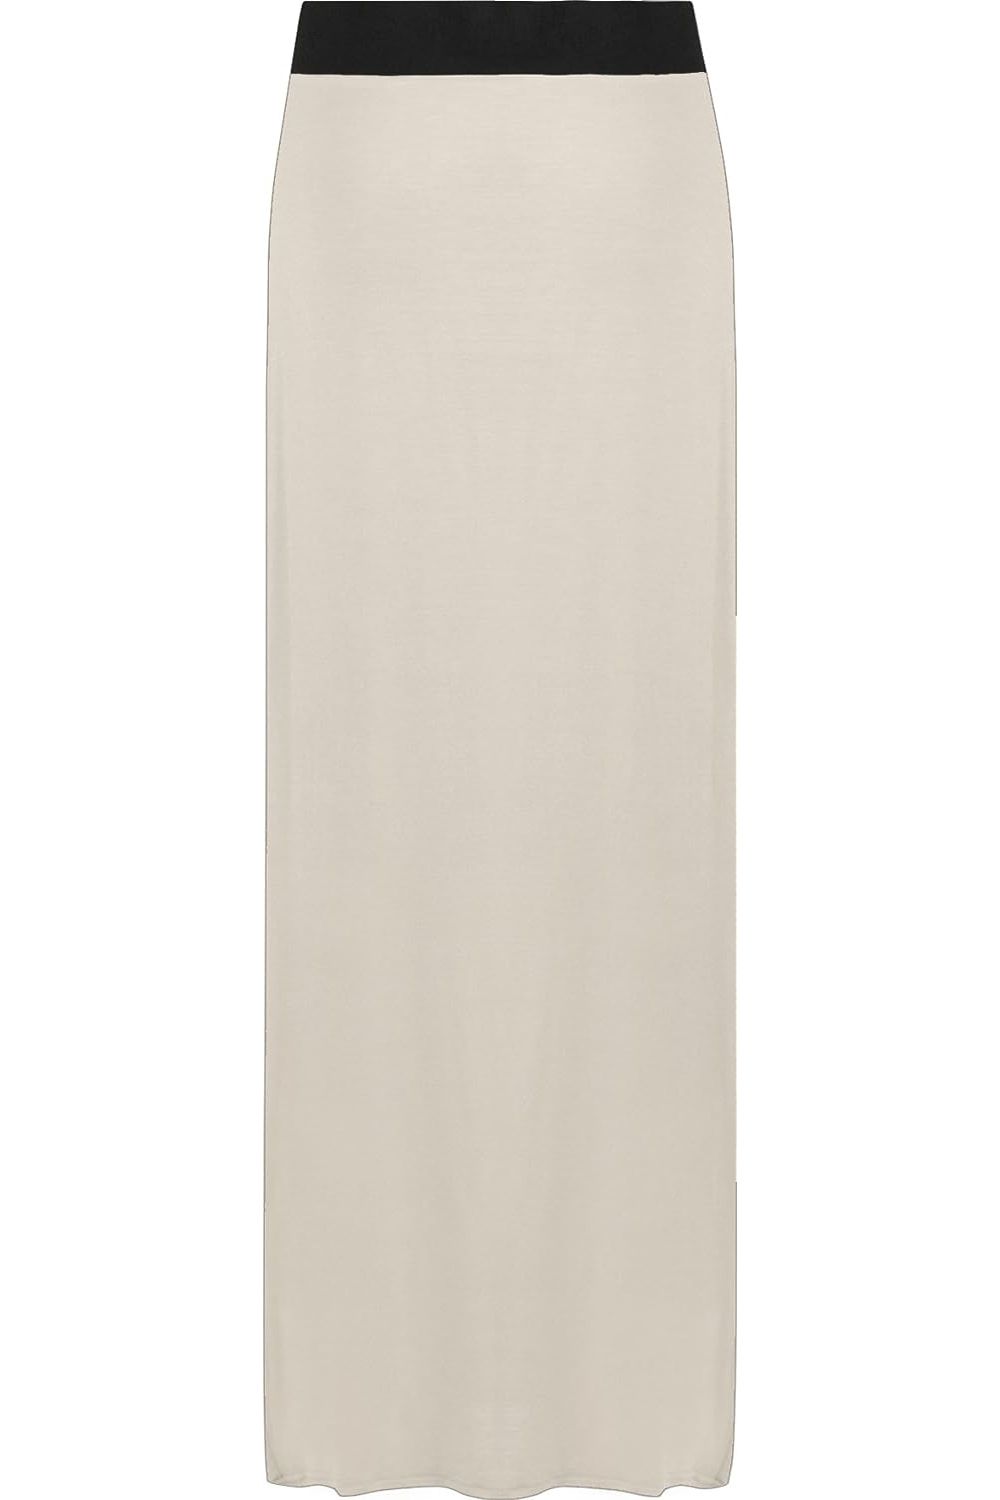 Plus Size Pencil Long Maxi Skirt Elasticated Waist